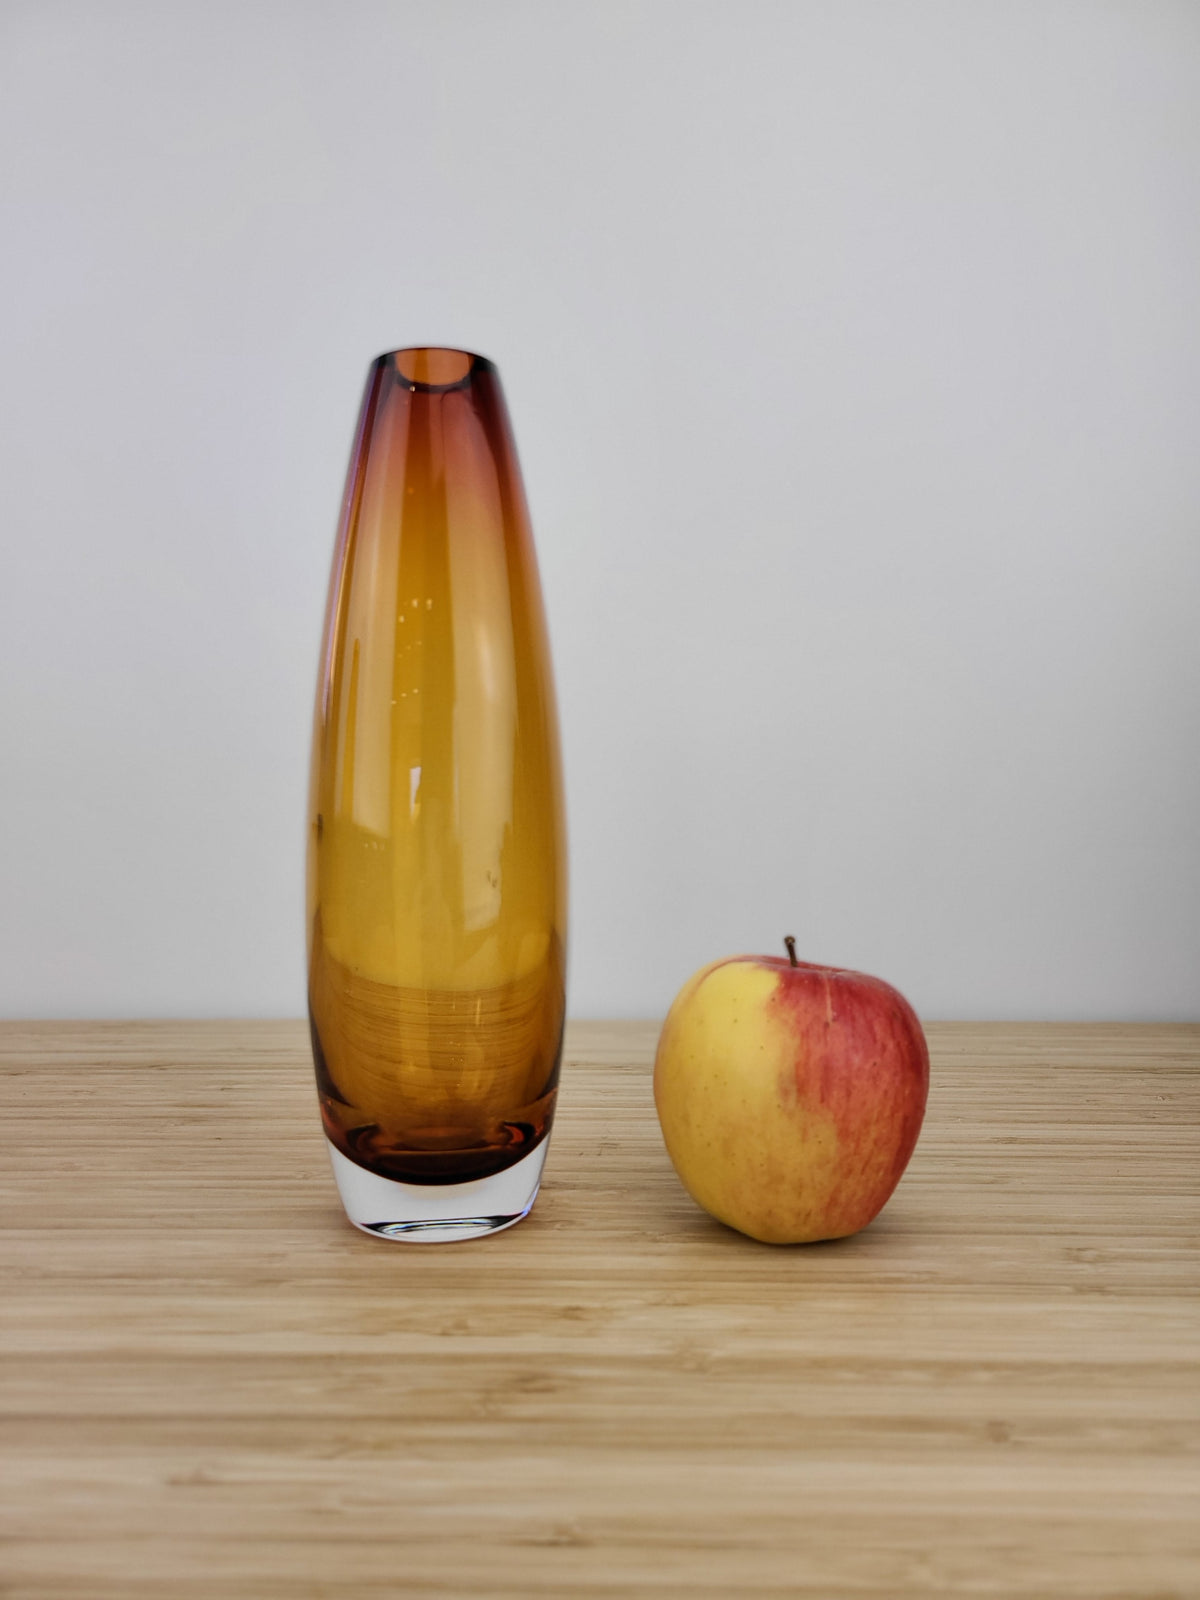 Pair of Amber Vases